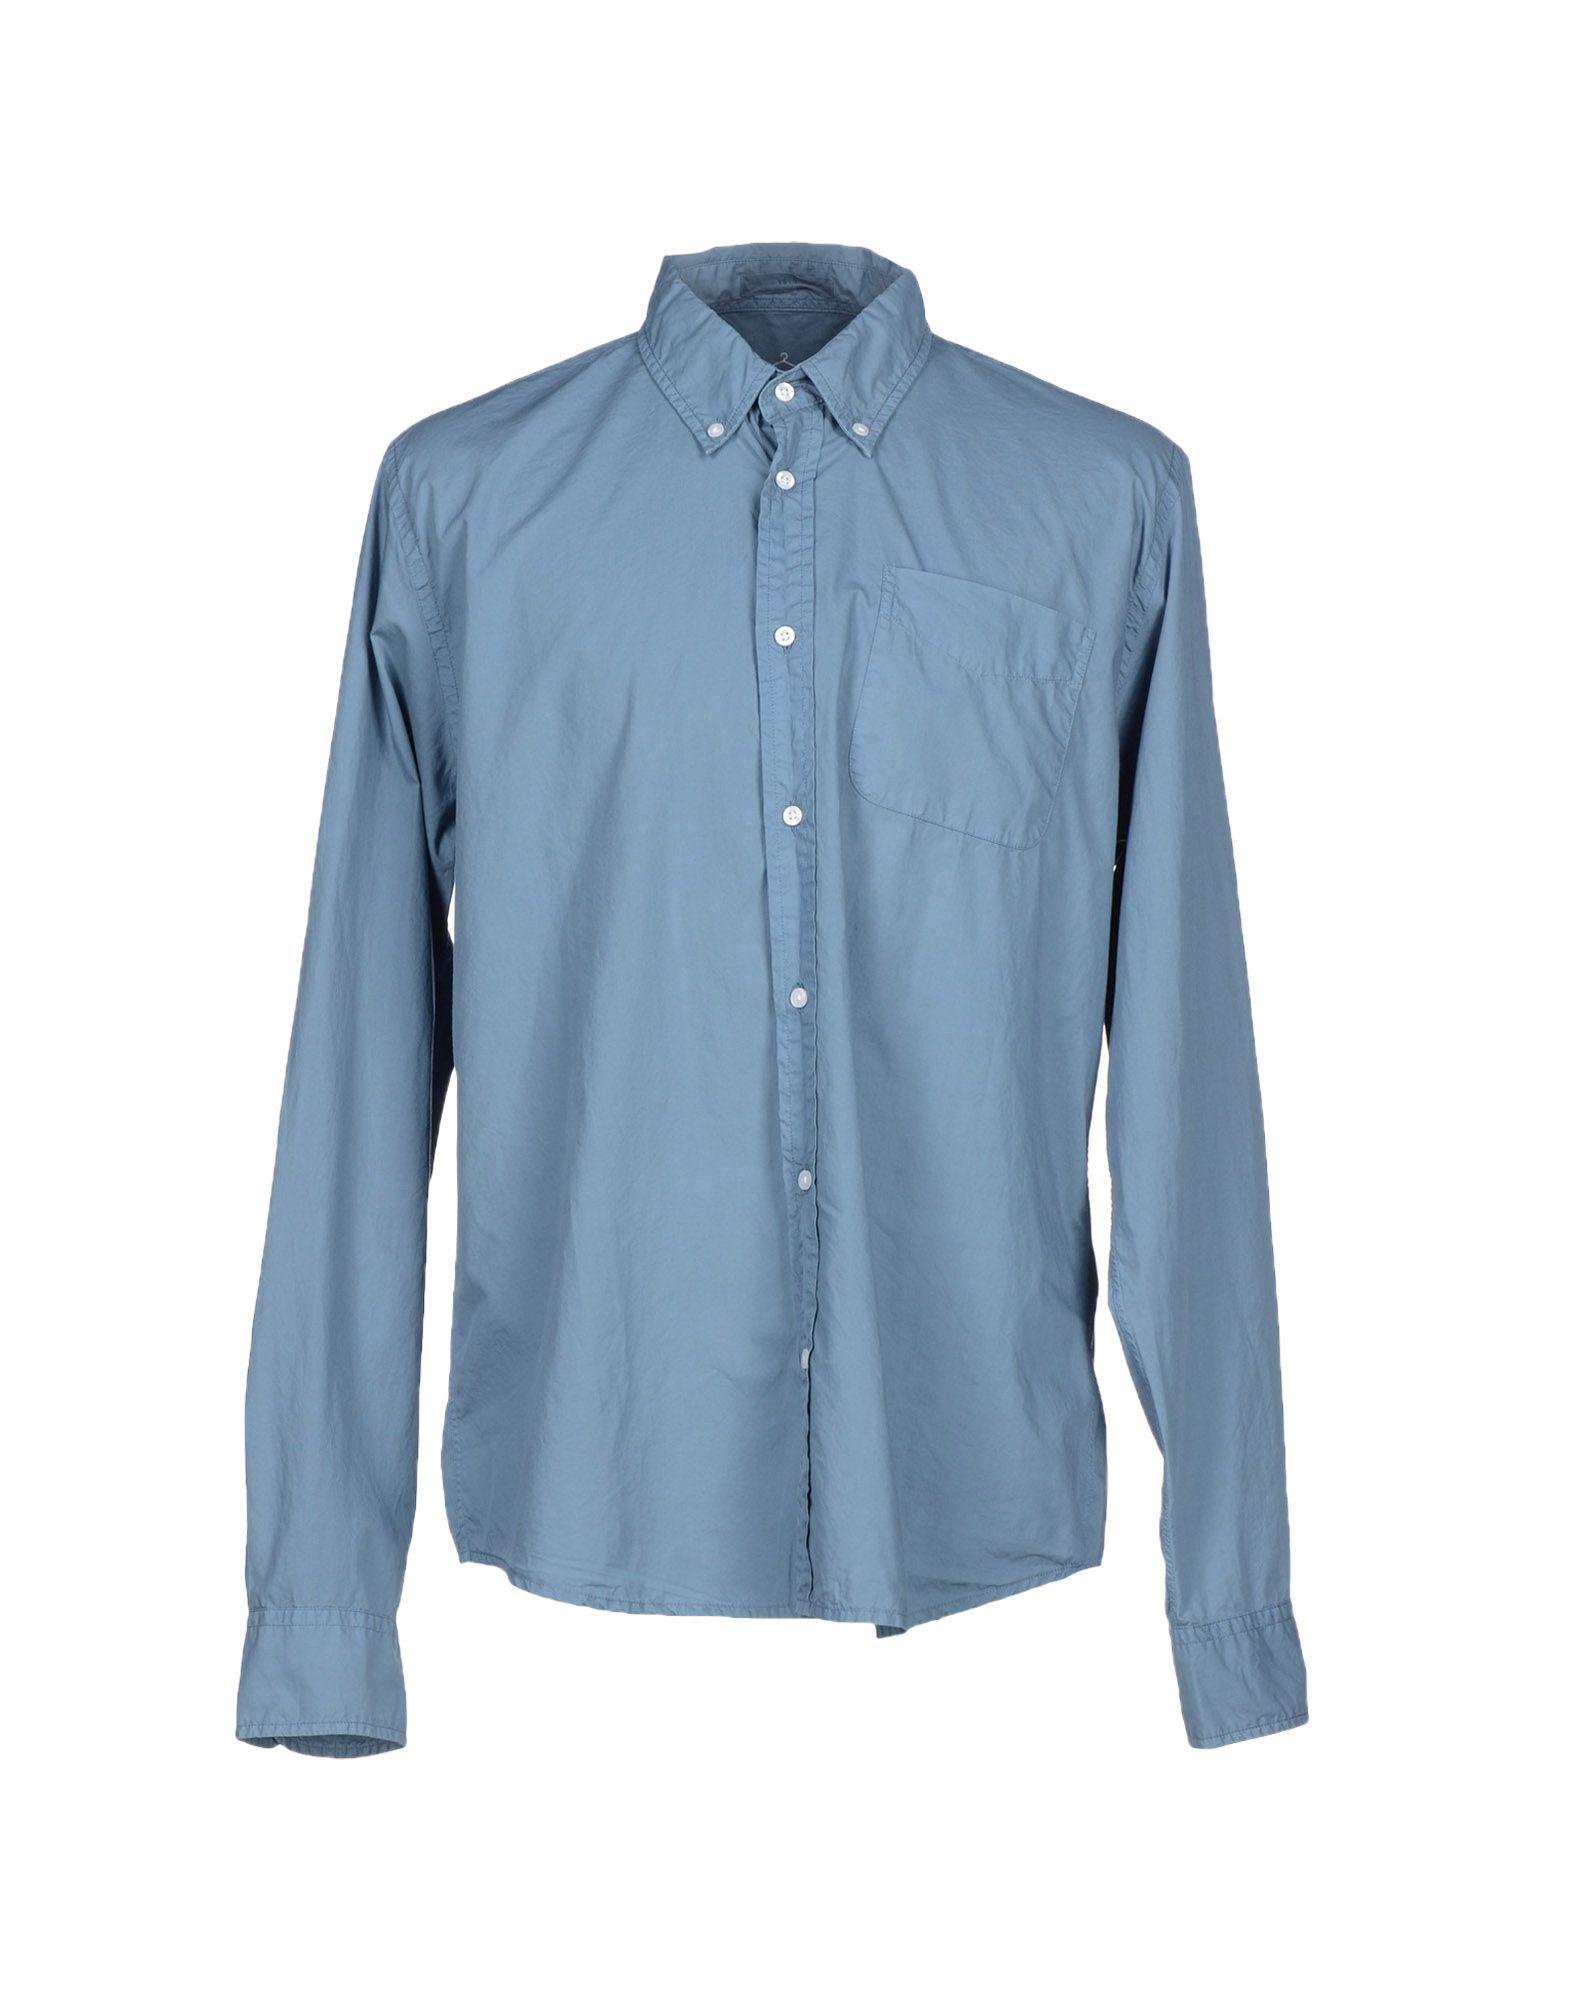 B.D. Baggies Cotton Shirt in Slate Blue (Gray) for Men - Lyst